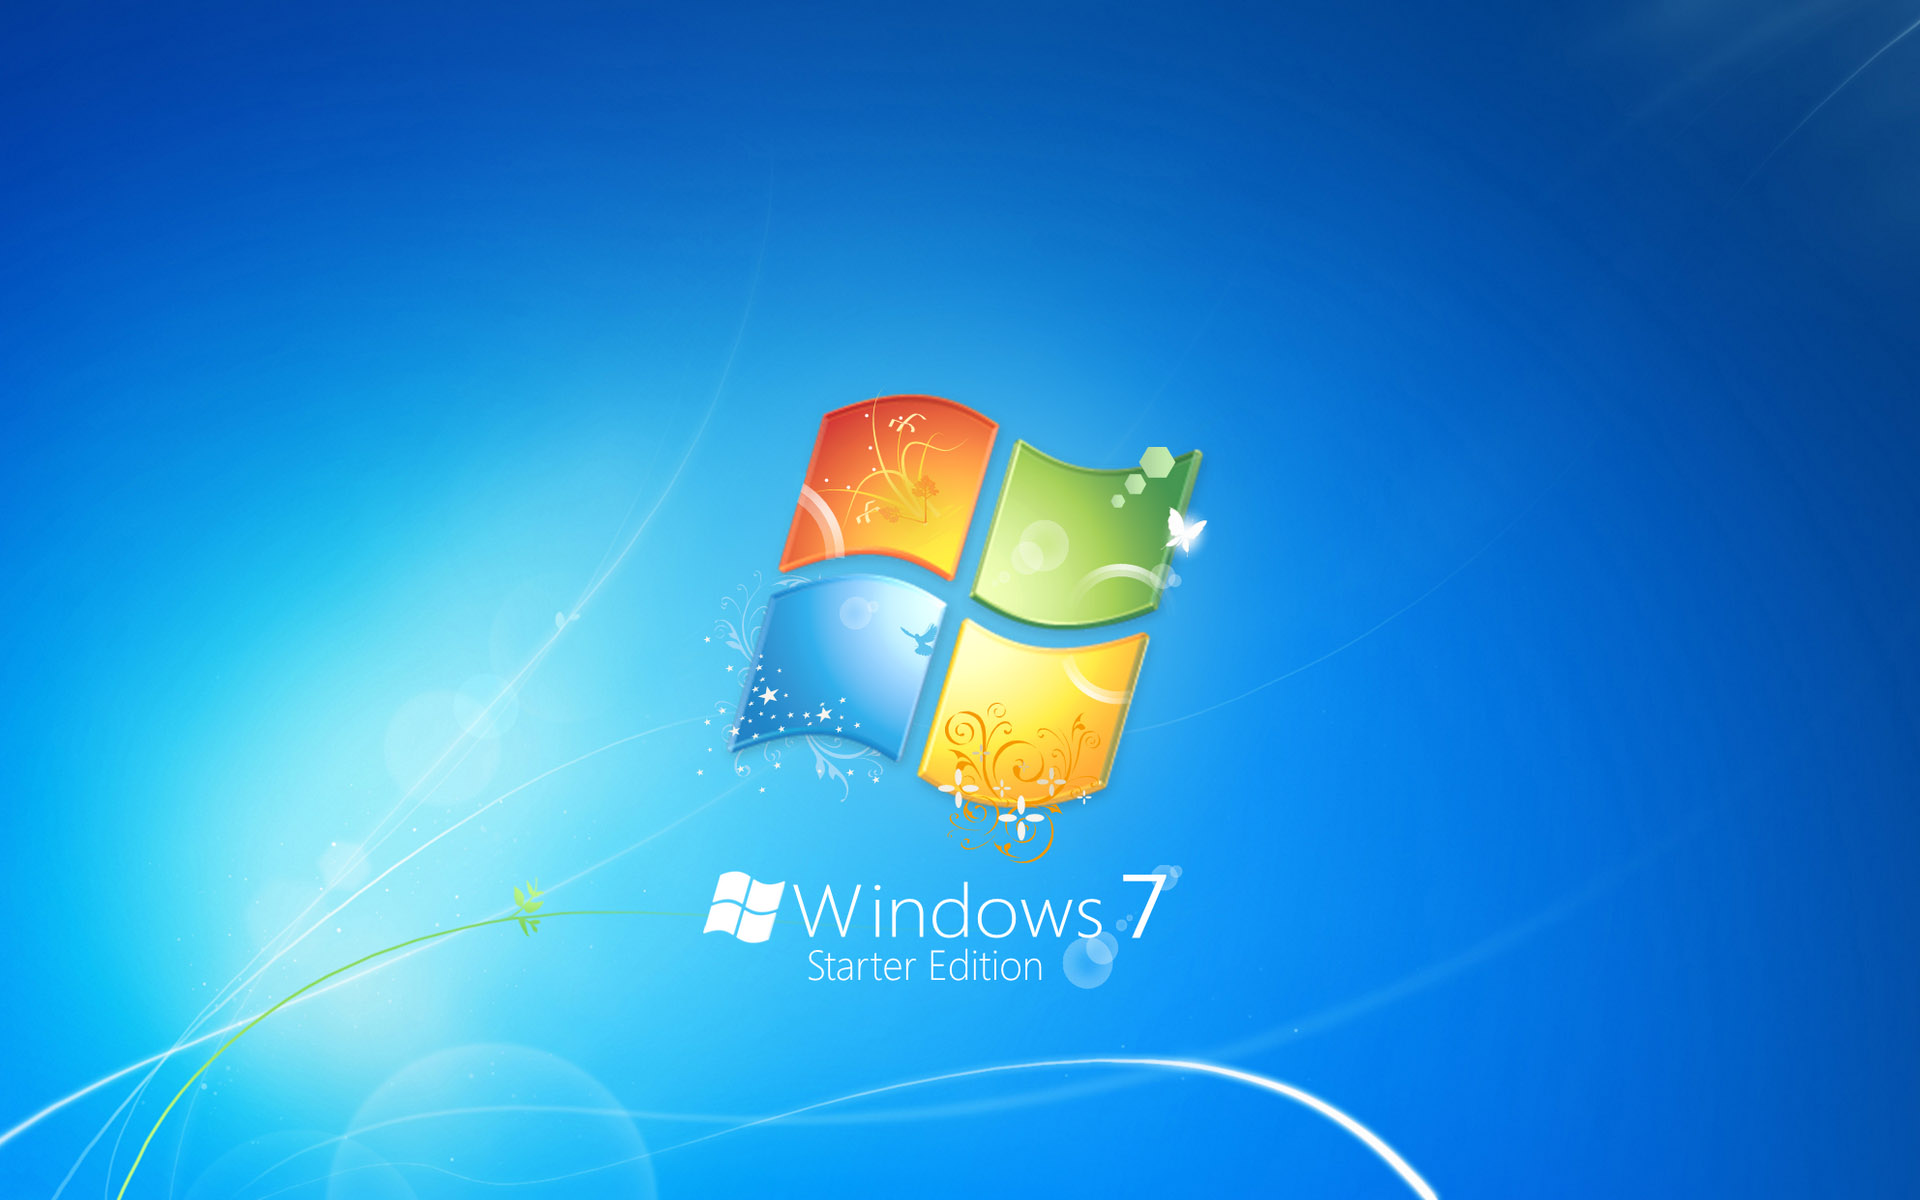 Windows 7 Starter Edition   Windows 7 Wallpaper 26875574 1920x1200